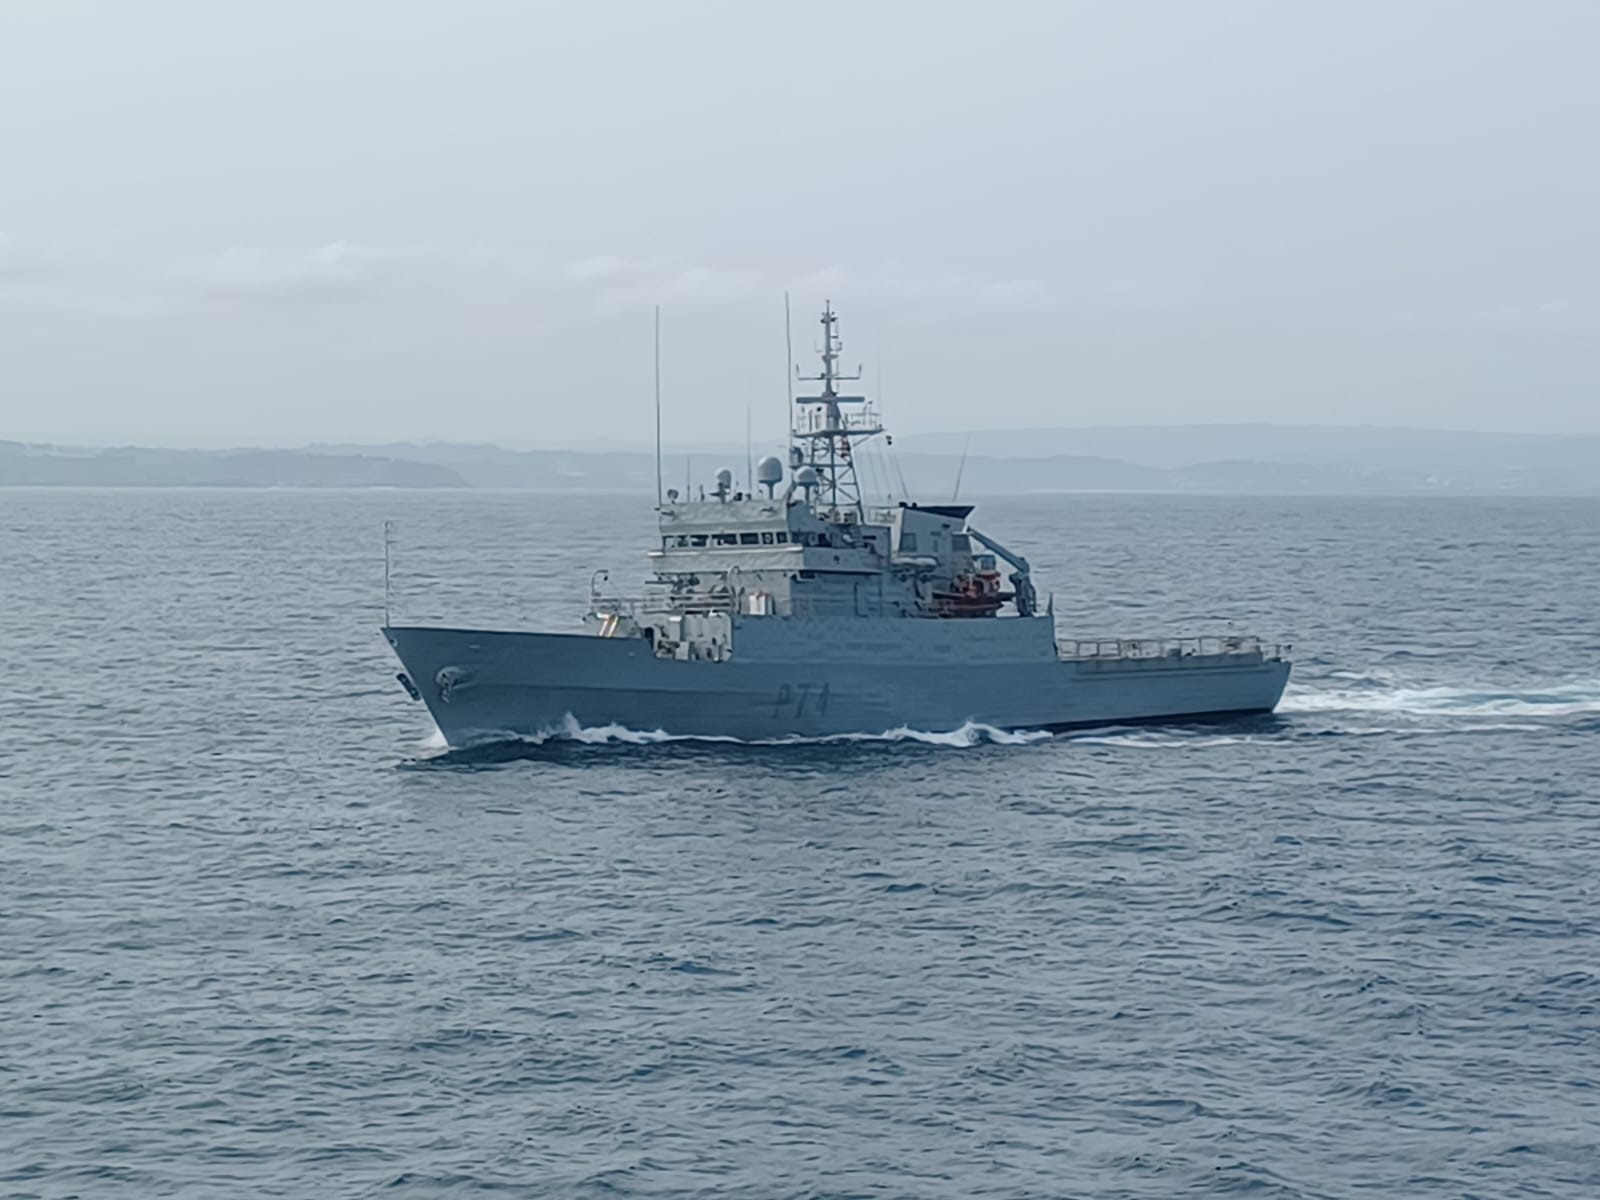 The offshore patrol vessel Atalaya P-74